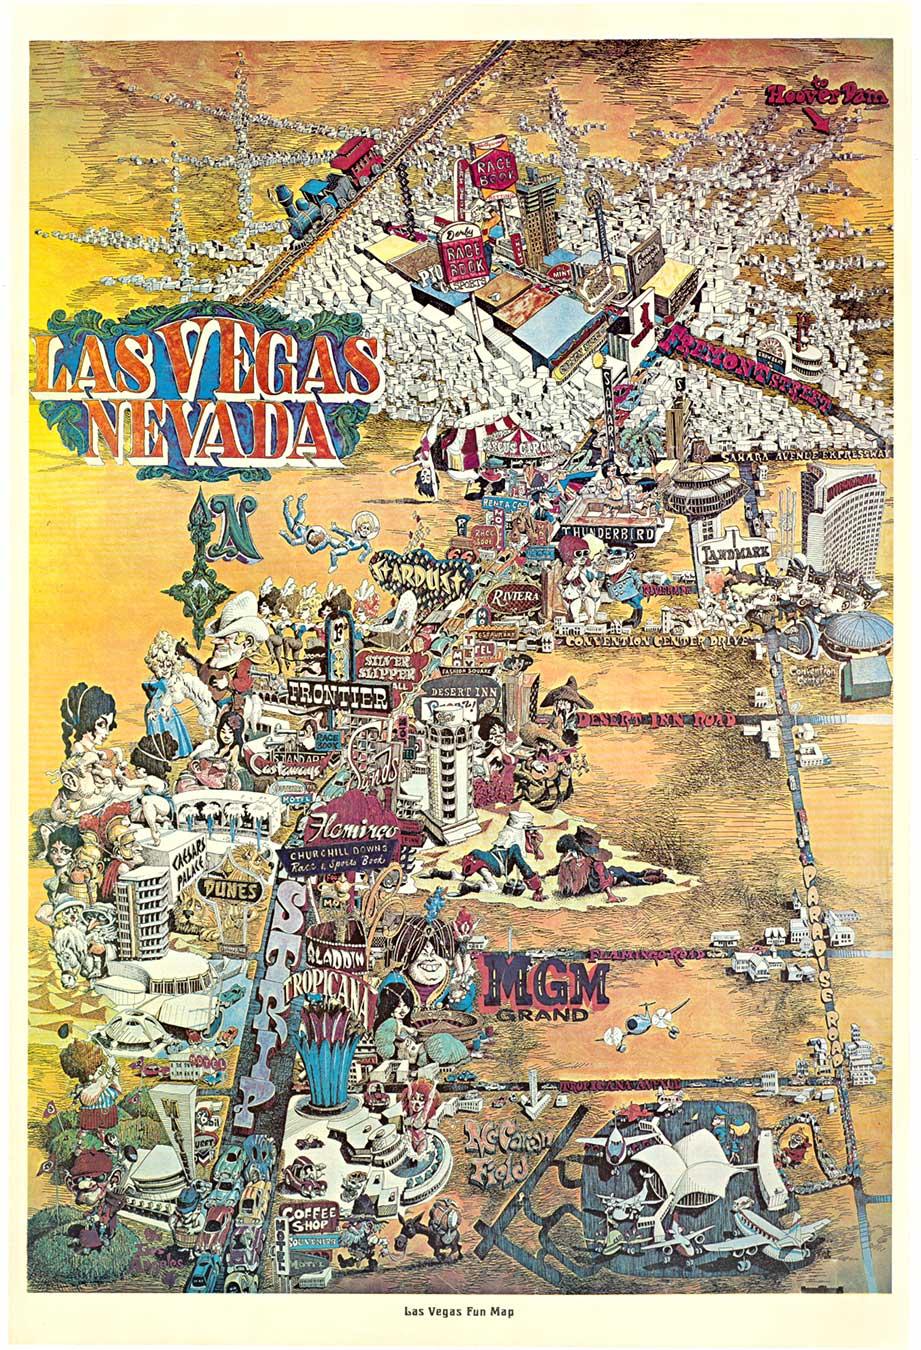 King Figurative Print - Original Las Vegas Fun Map vintage 1960s travel poster